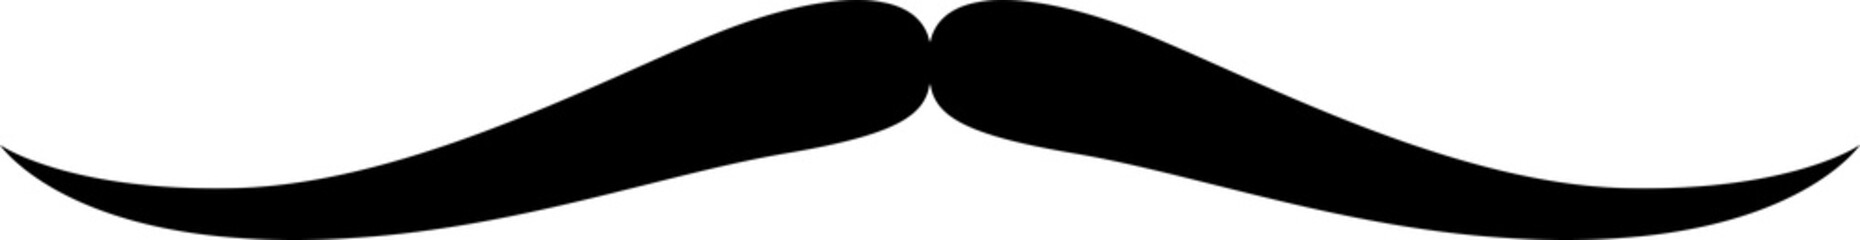 Gentlemans mustaches isolated barbershop symbol